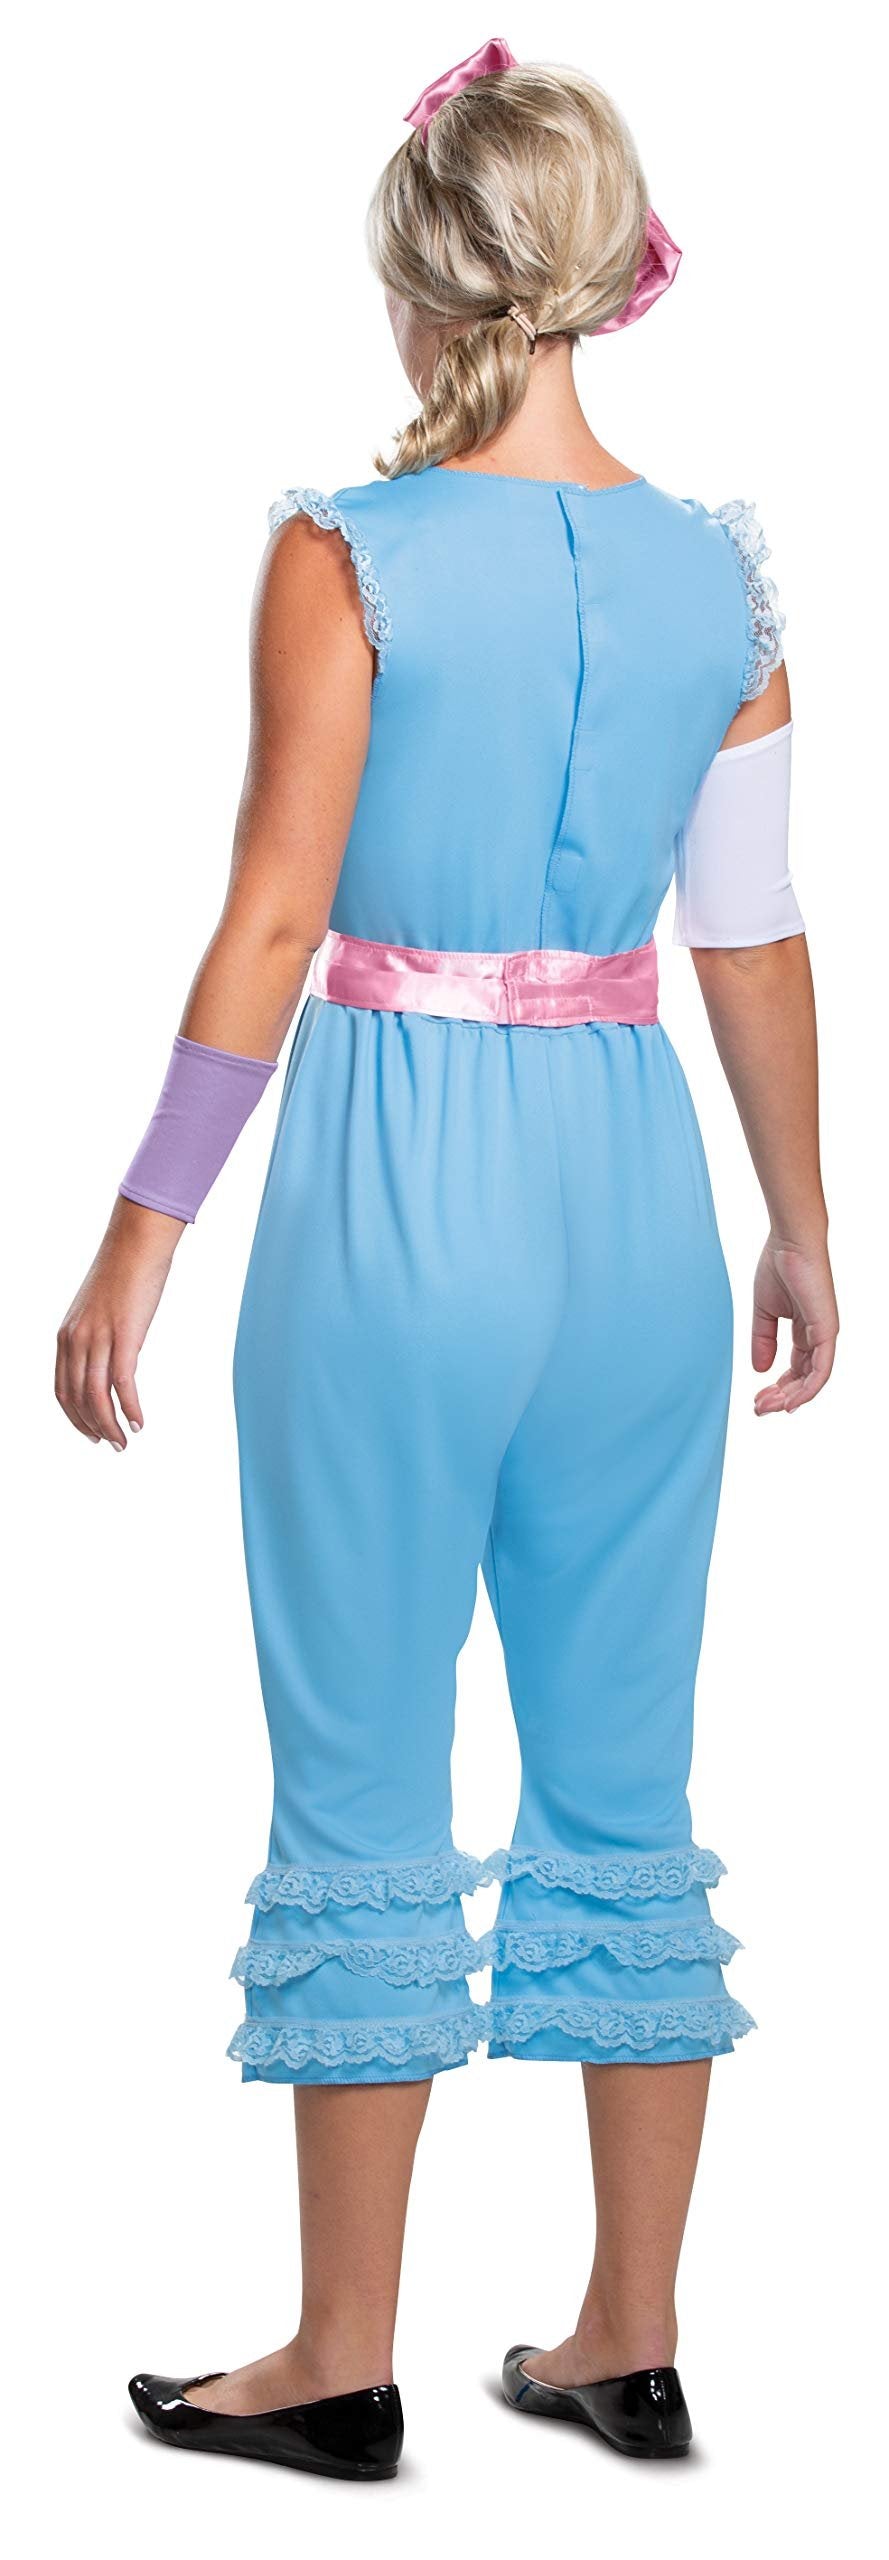 Disguise Disney Pixar Bo Peep Toy Story 4 Deluxe Women's Costume, Blue, L (12-14)